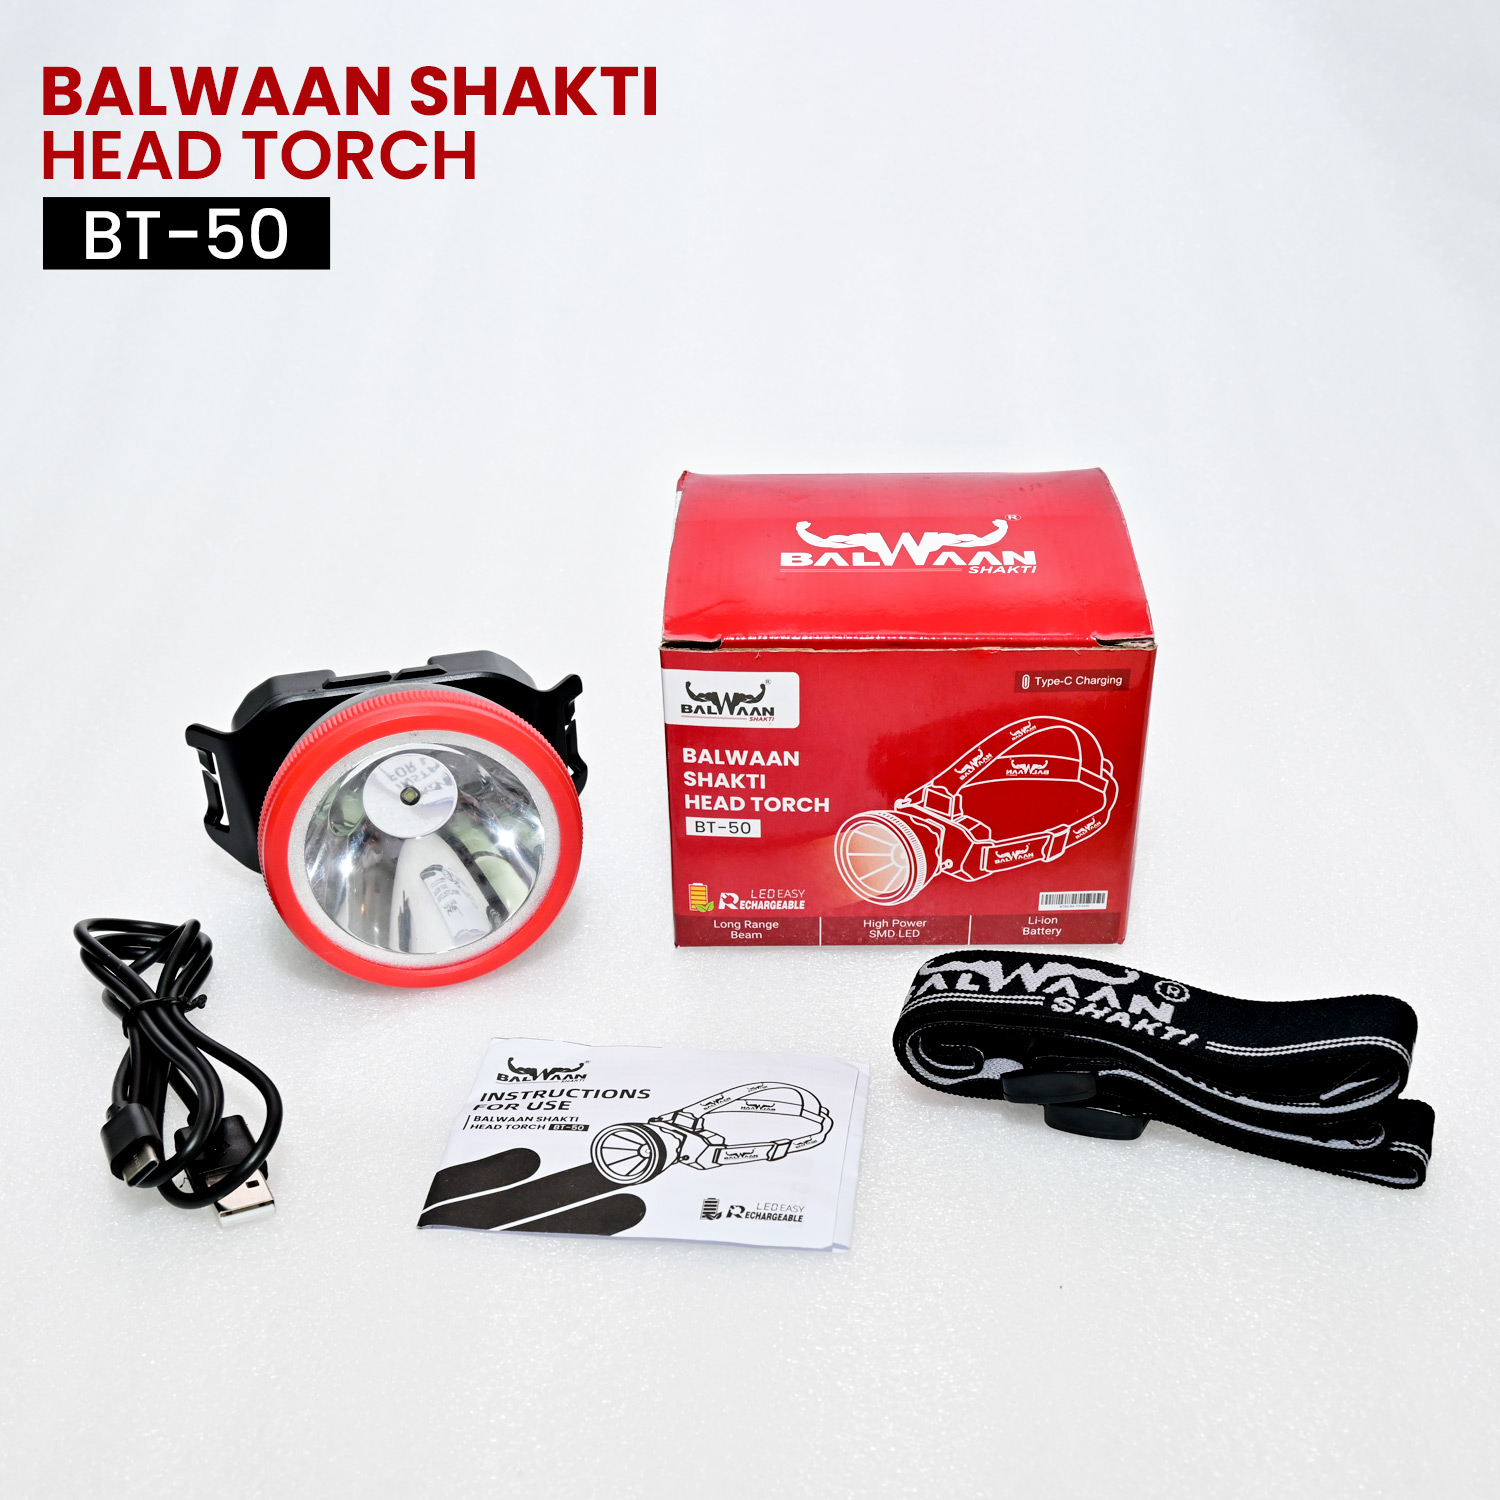 Balwaan Shakti LED Flashlight Head Torch BT-50